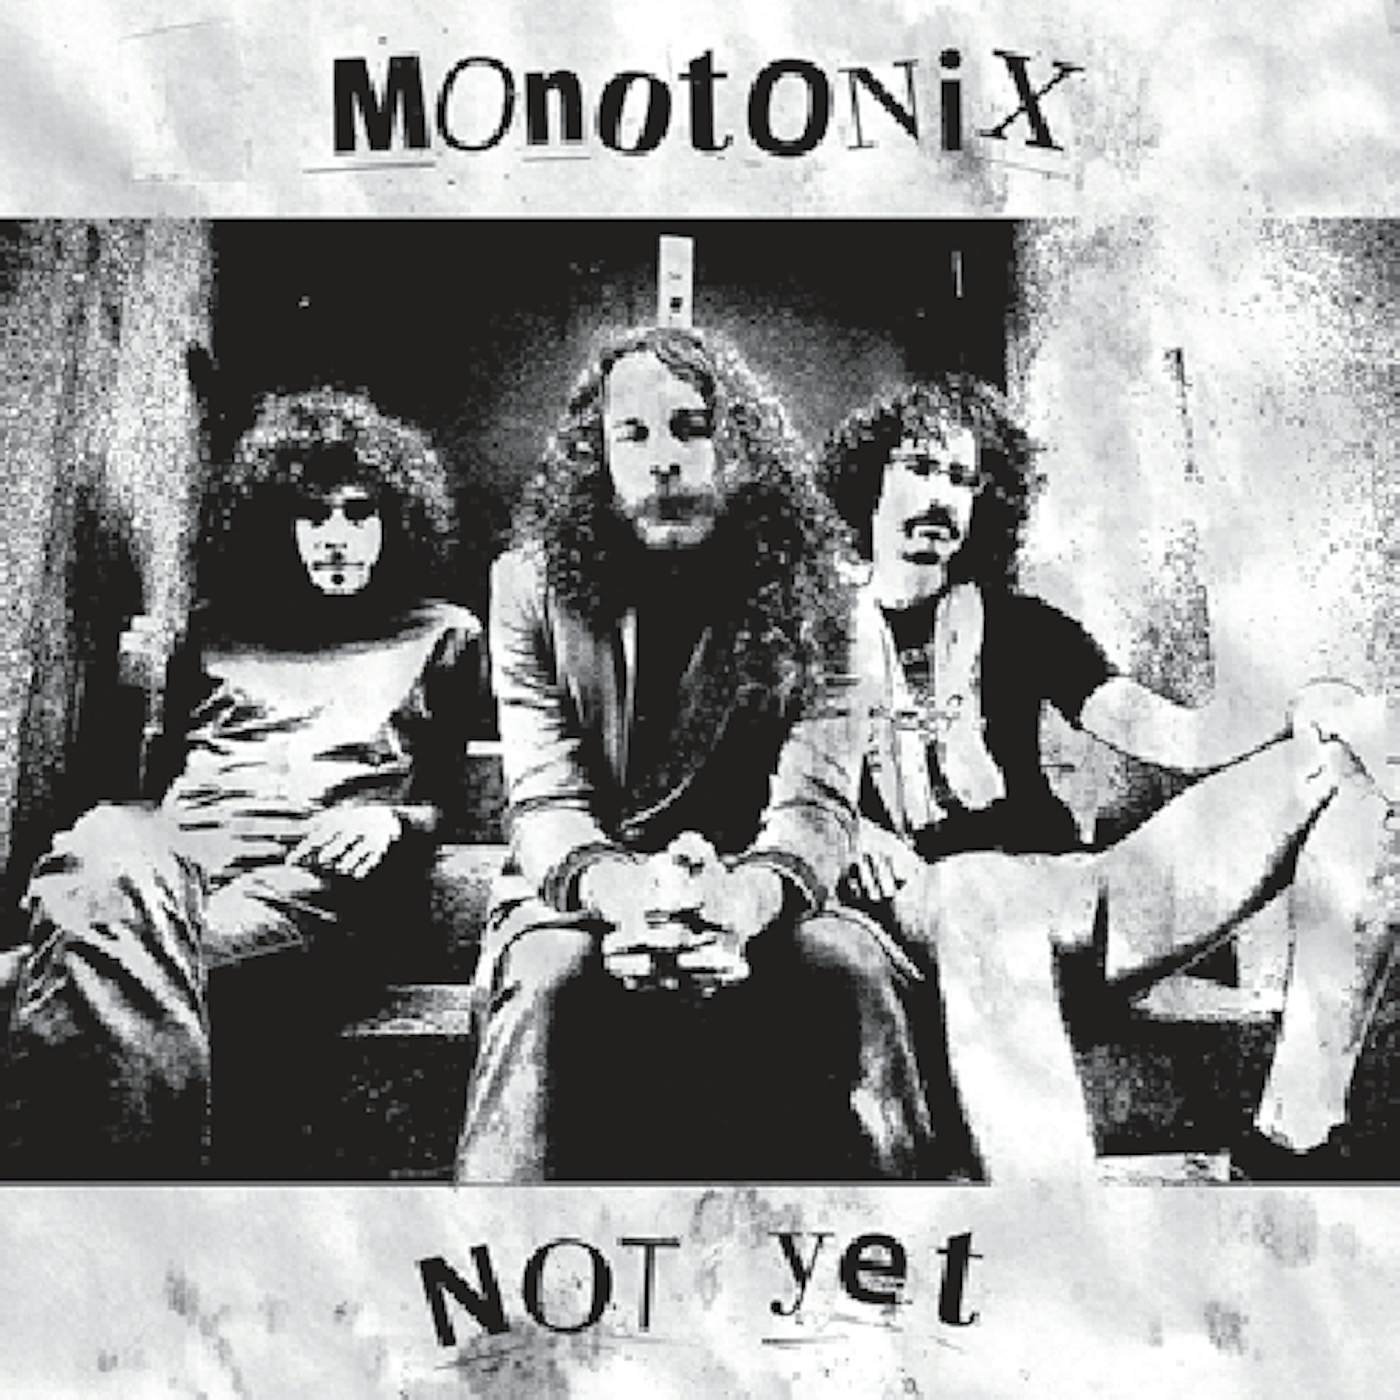 Monotonix NOT YET CD